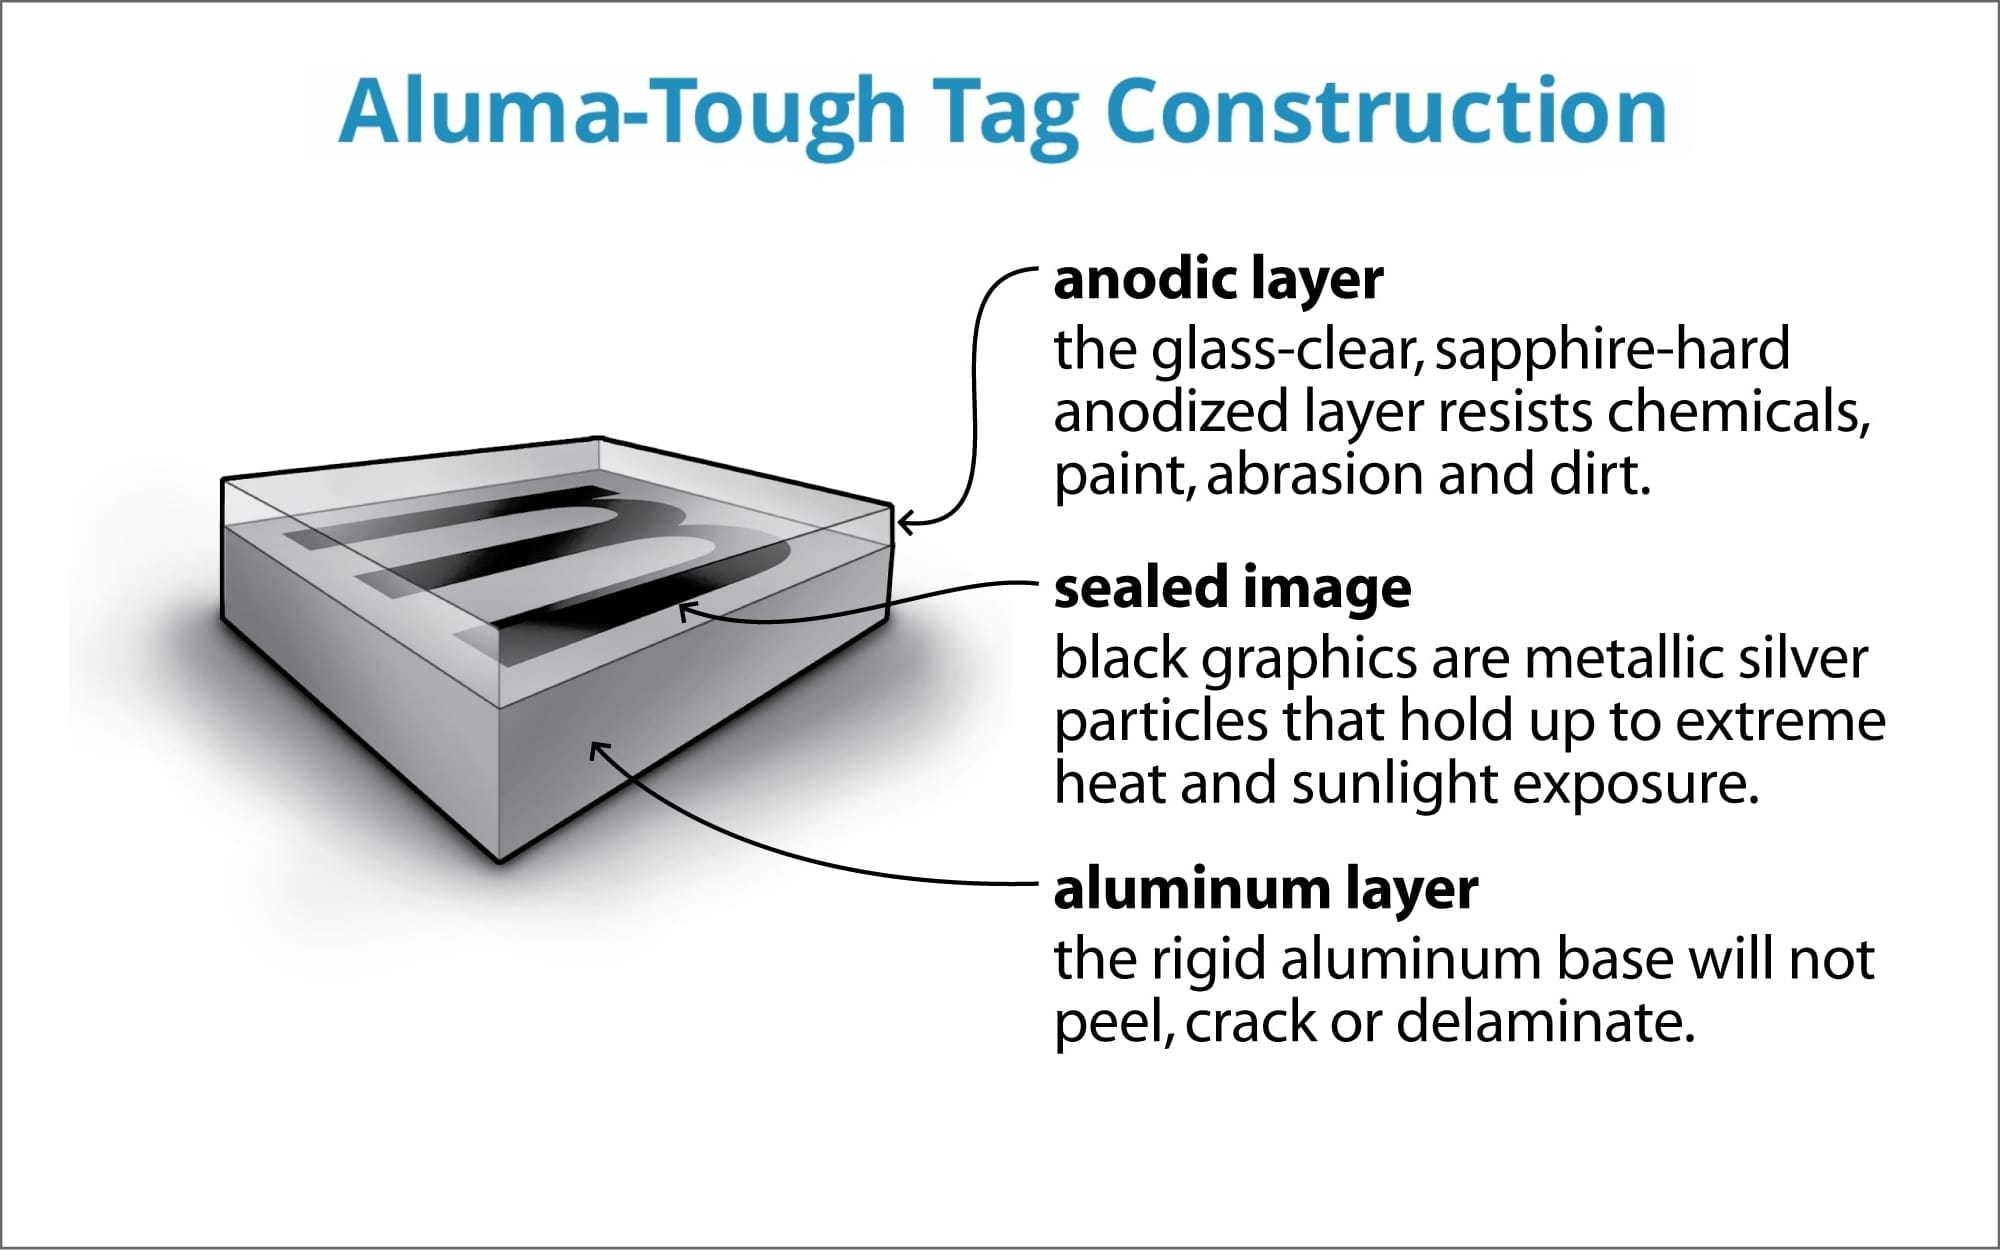 Aluma-Tough Tag Manufacturing Process Creates Anodized Aluminum Tags that Last 20+ years